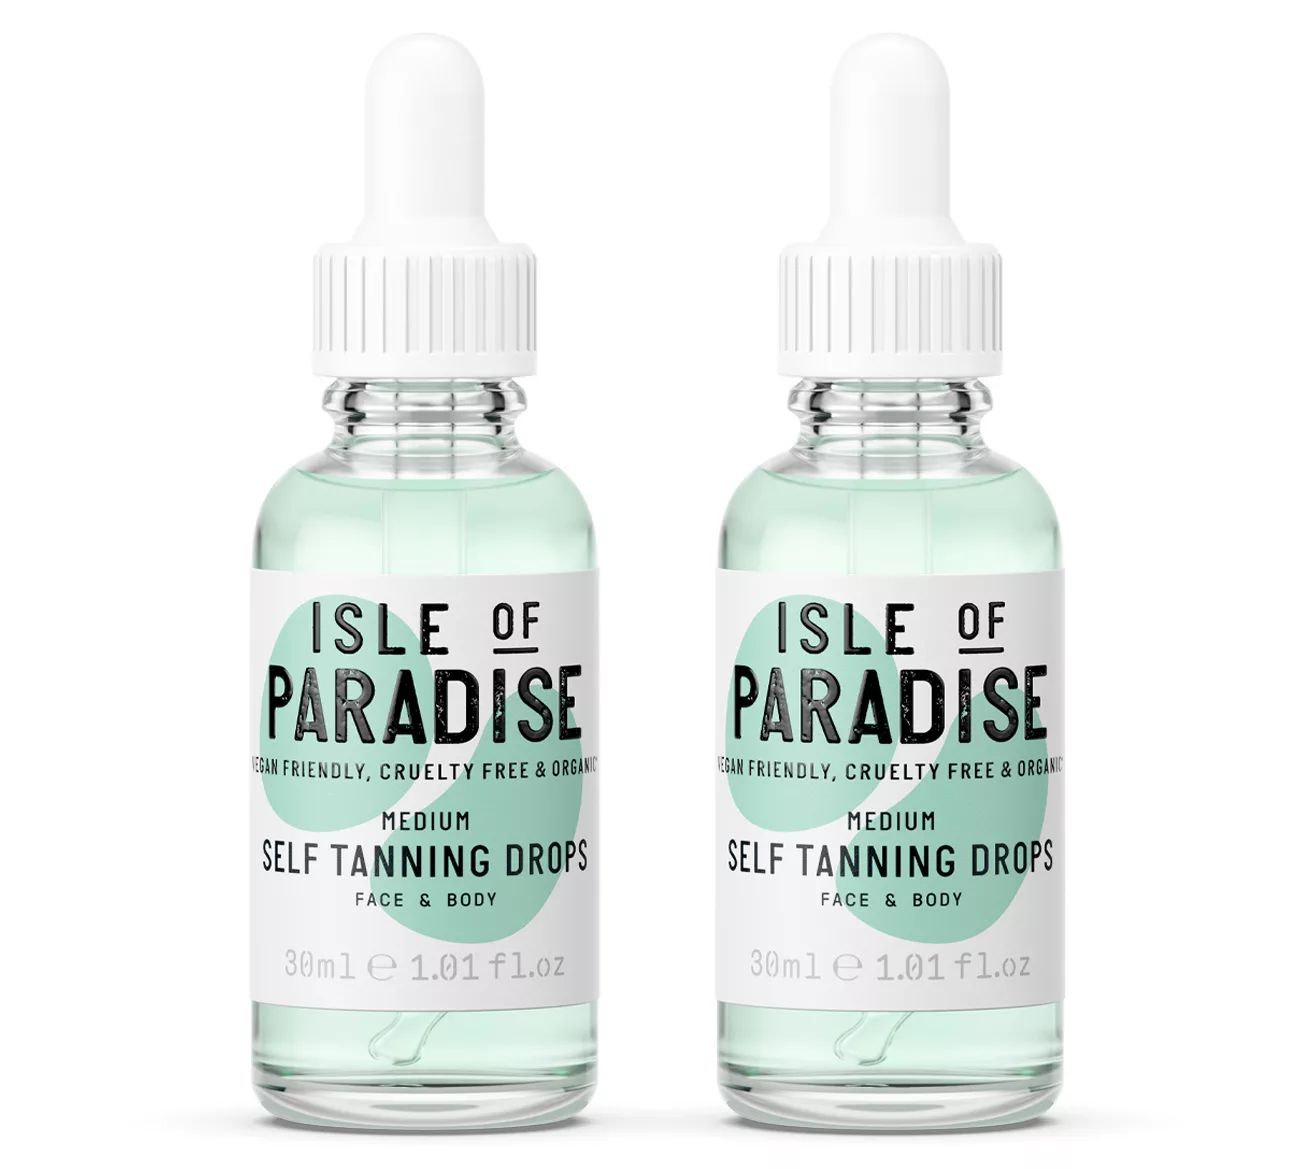 Isle of Paradise Self-Tanning Drops Duo Drops Duo | QVC